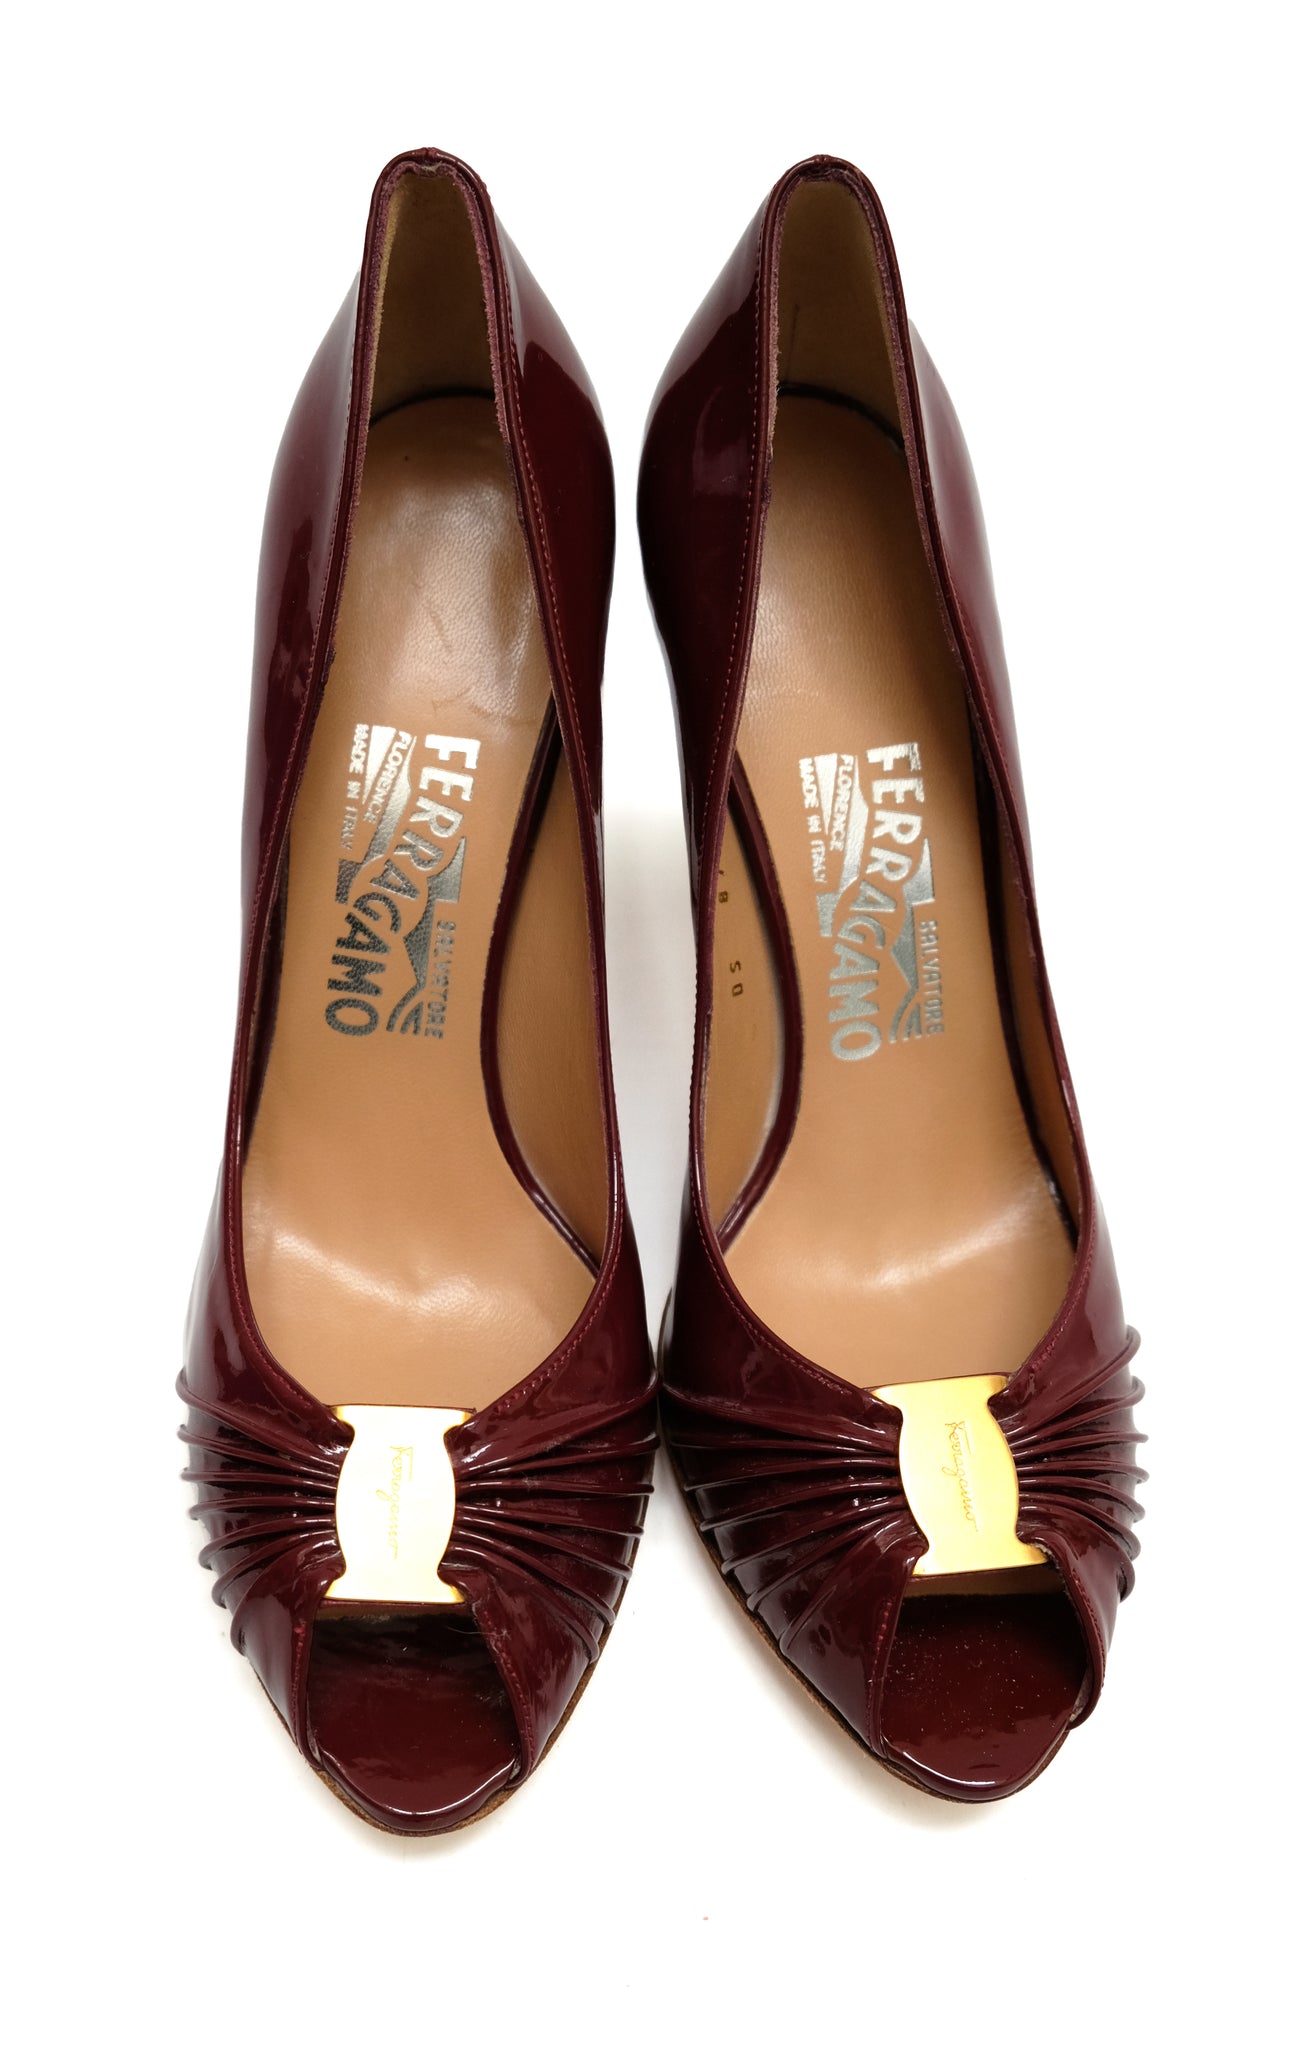 Salvatore Ferragamo Peep Toe Shoes in Burgundy Patent Leather, UK5.5 ...